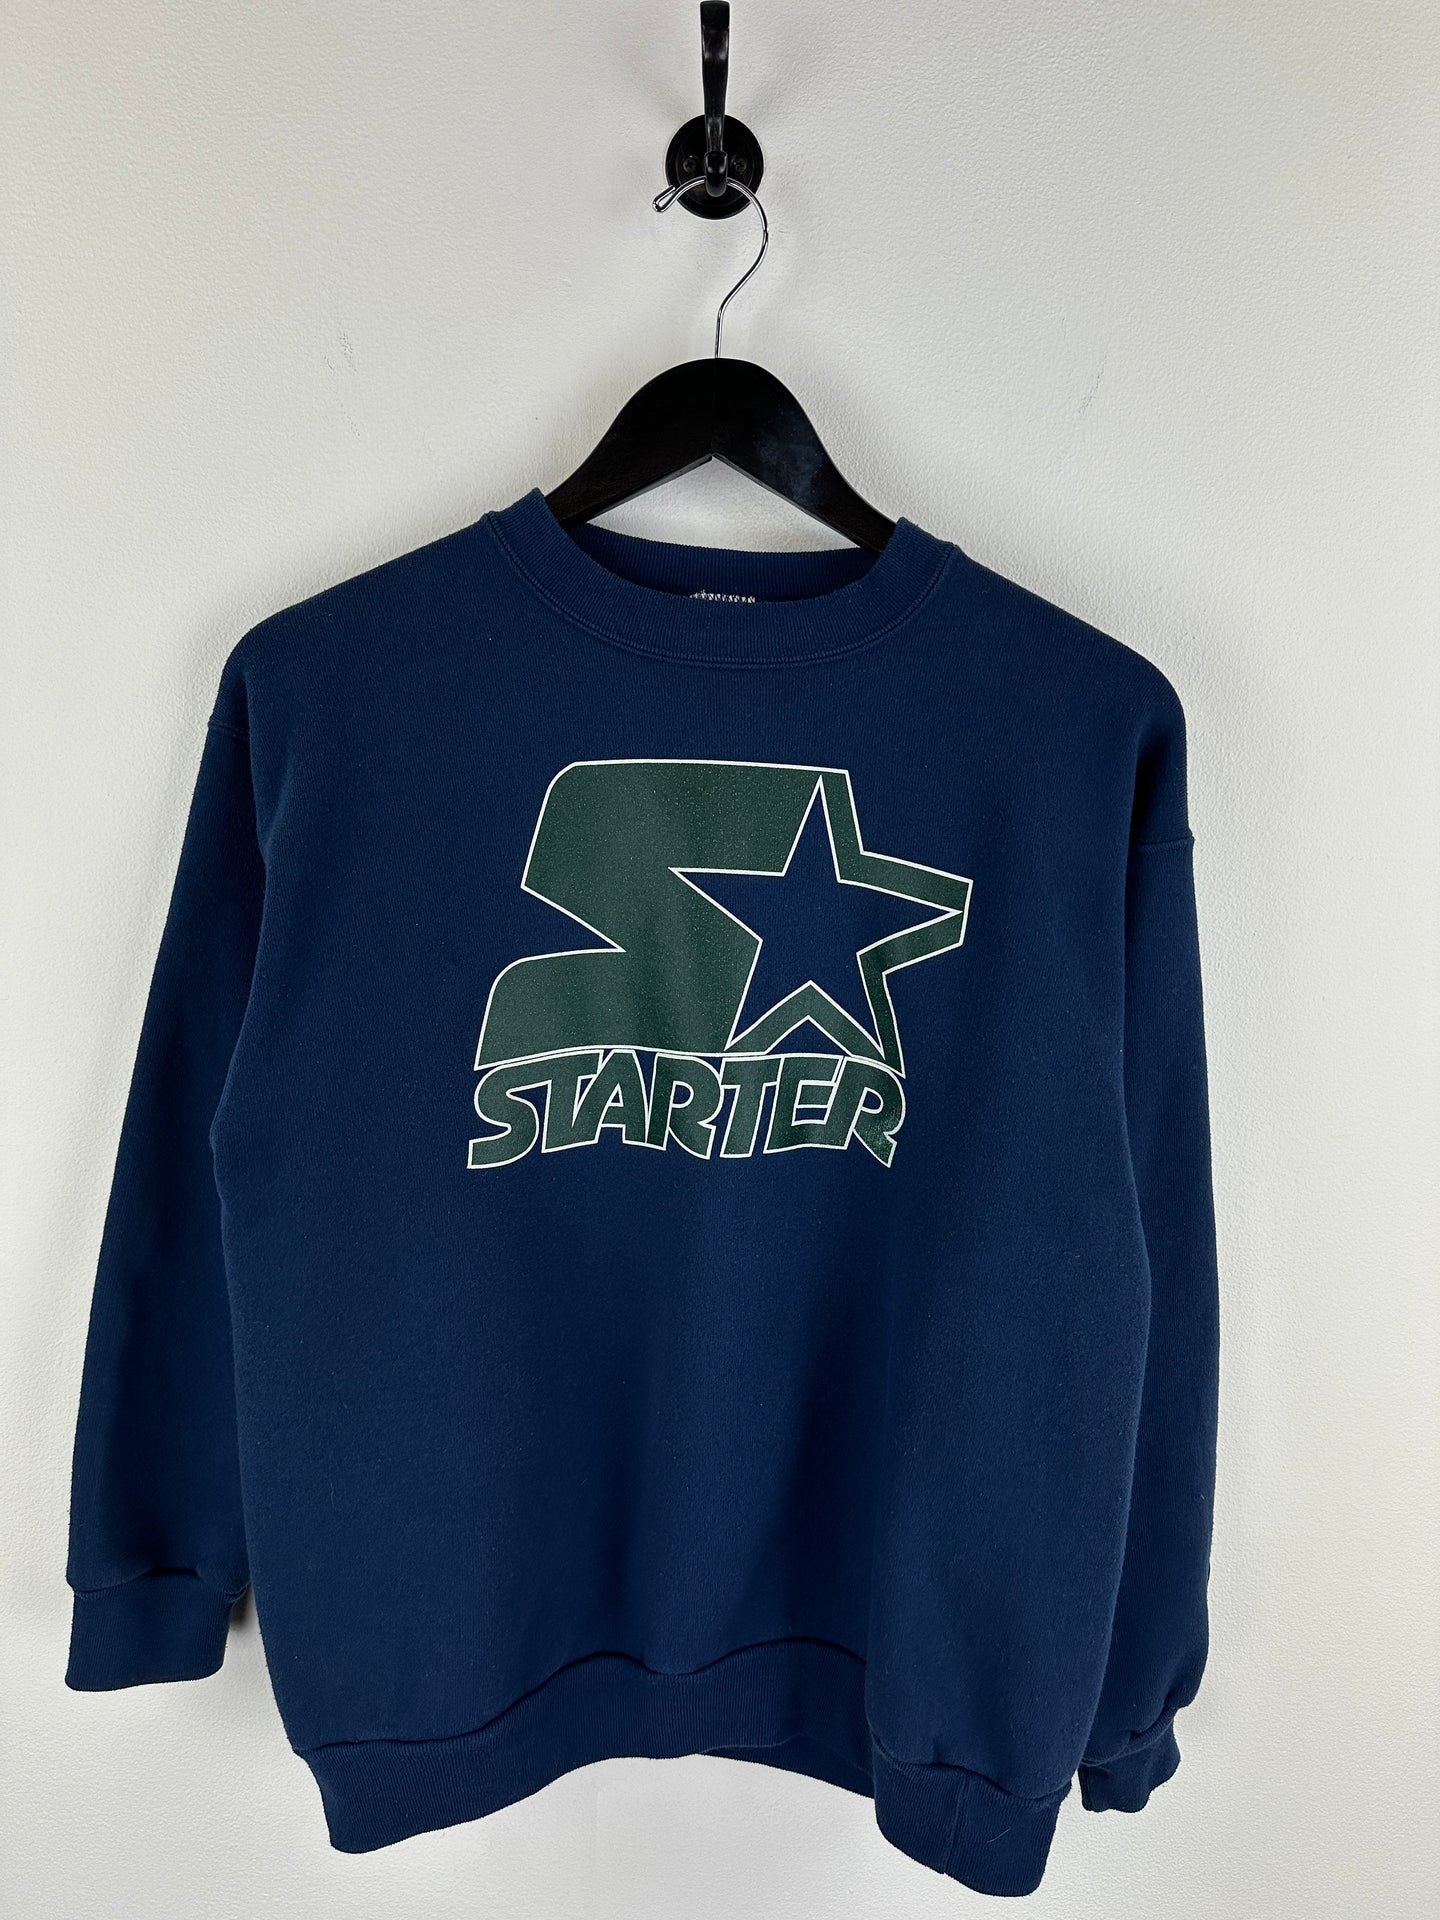 Vintage Starter Sweatshirt (M)